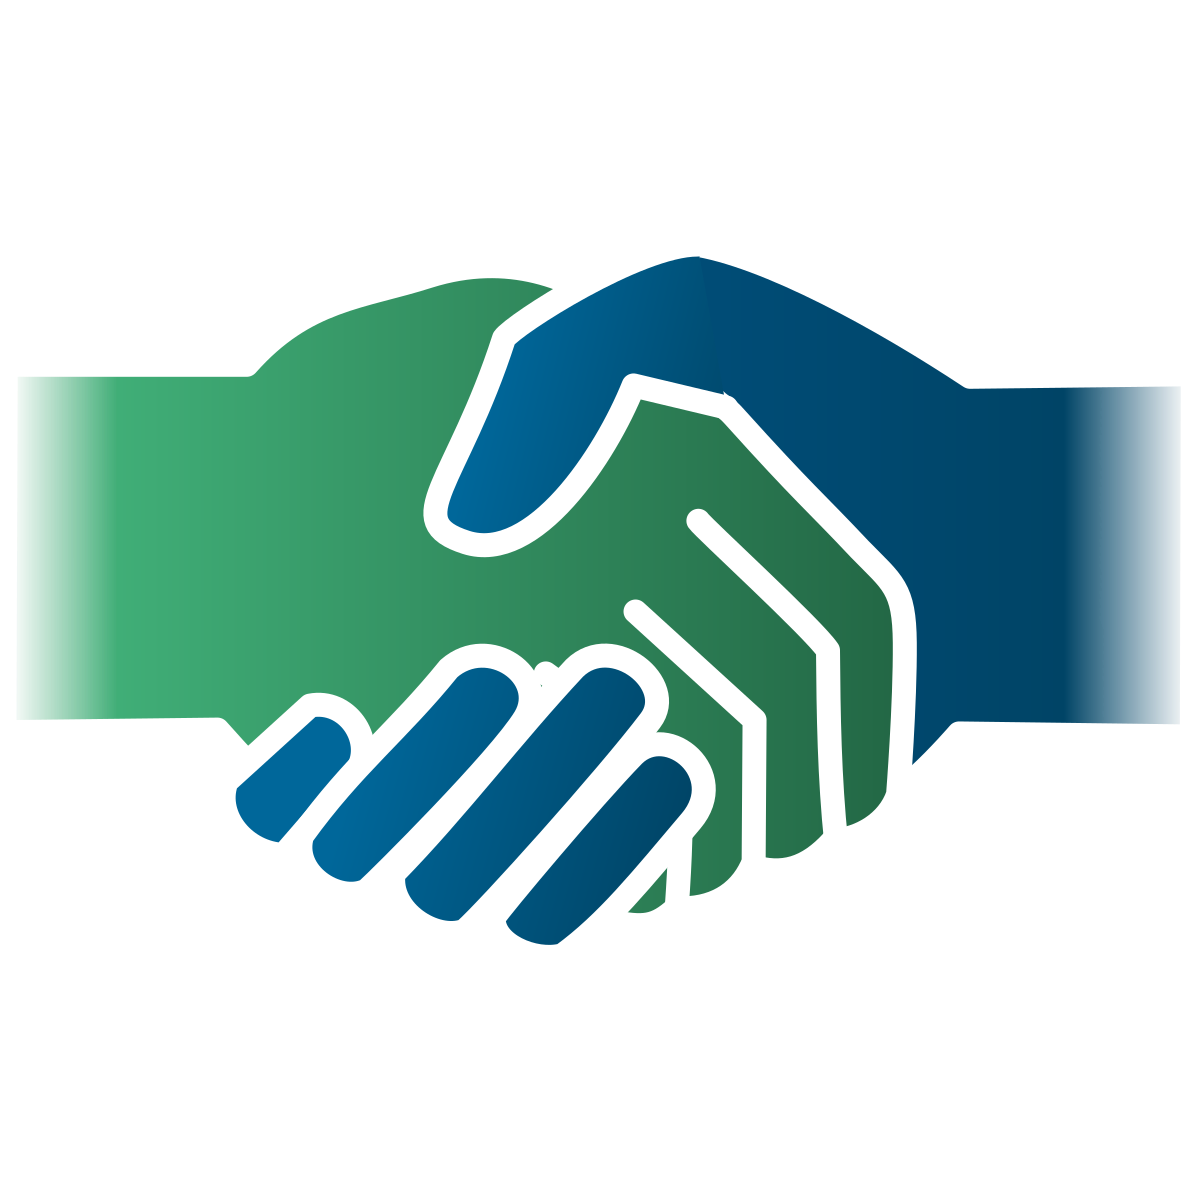 File:Handshake icon.svg - Wikimedia Commons